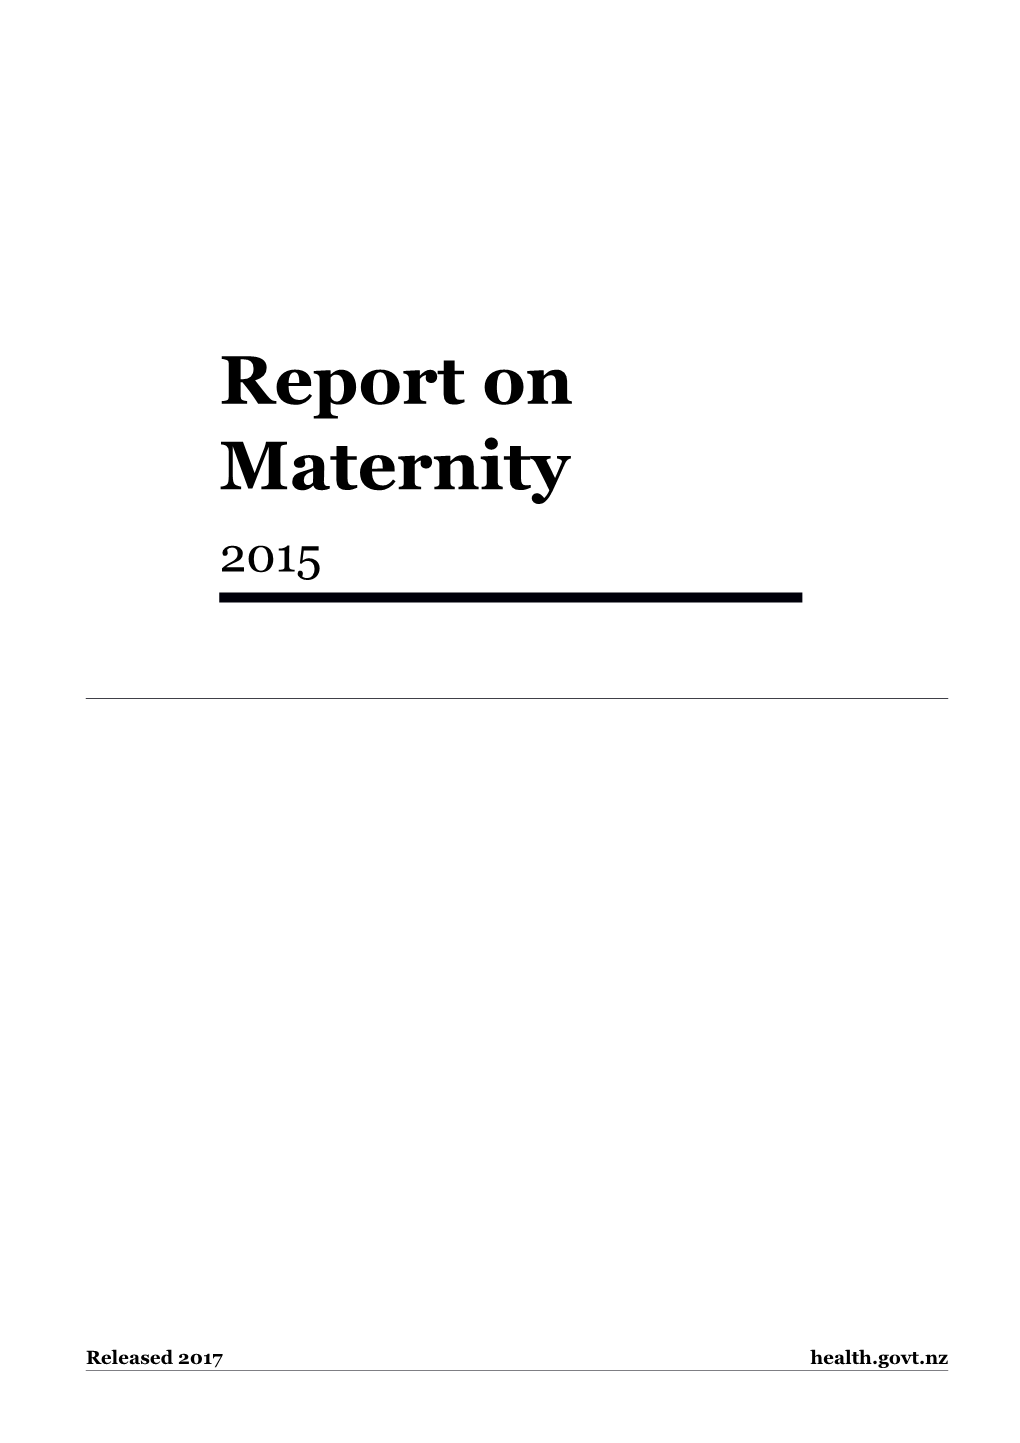 Report on Maternity 2015